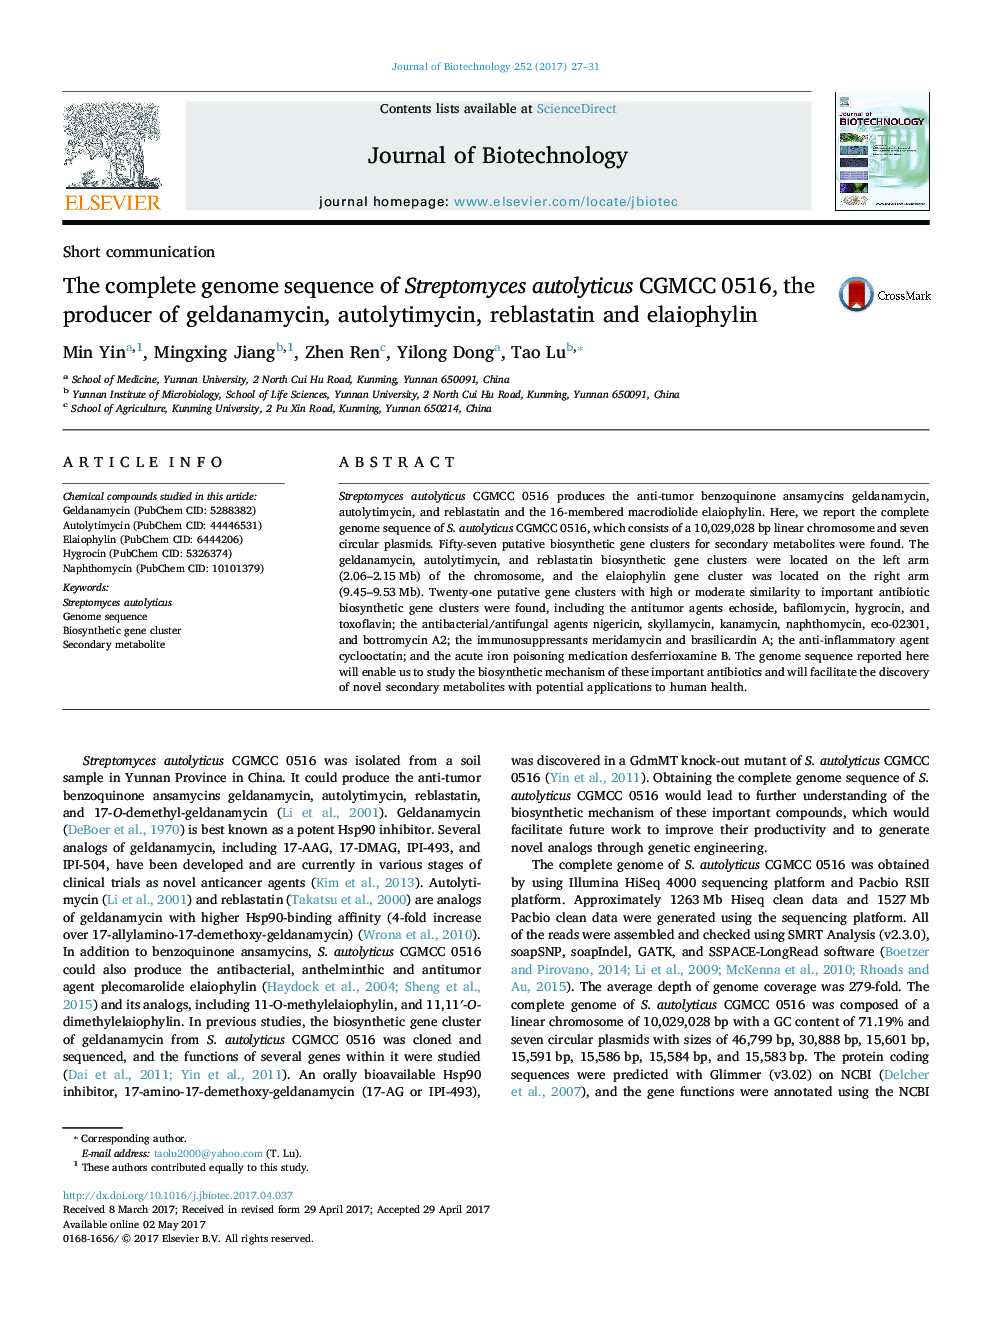 Short communicationThe complete genome sequence of Streptomyces autolyticus CGMCC 0516, the producer of geldanamycin, autolytimycin, reblastatin and elaiophylin